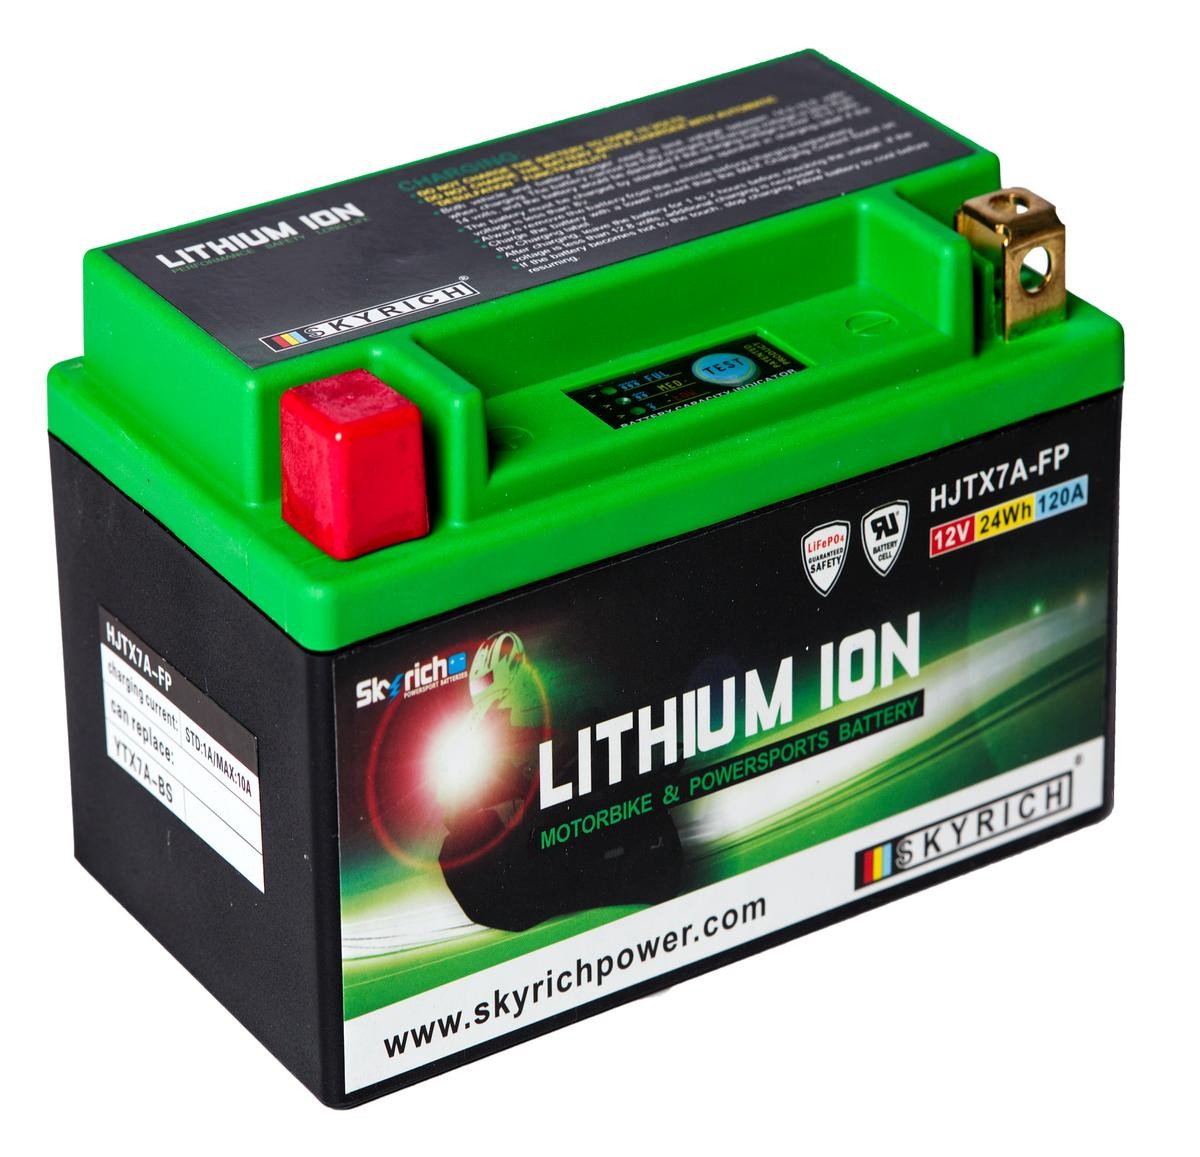 BAOTIAN 12G Batterie 12V 2Ah 120A N Li-Ionen-Batterie SKYRICH LITHIUM ION HJTX7A-FP